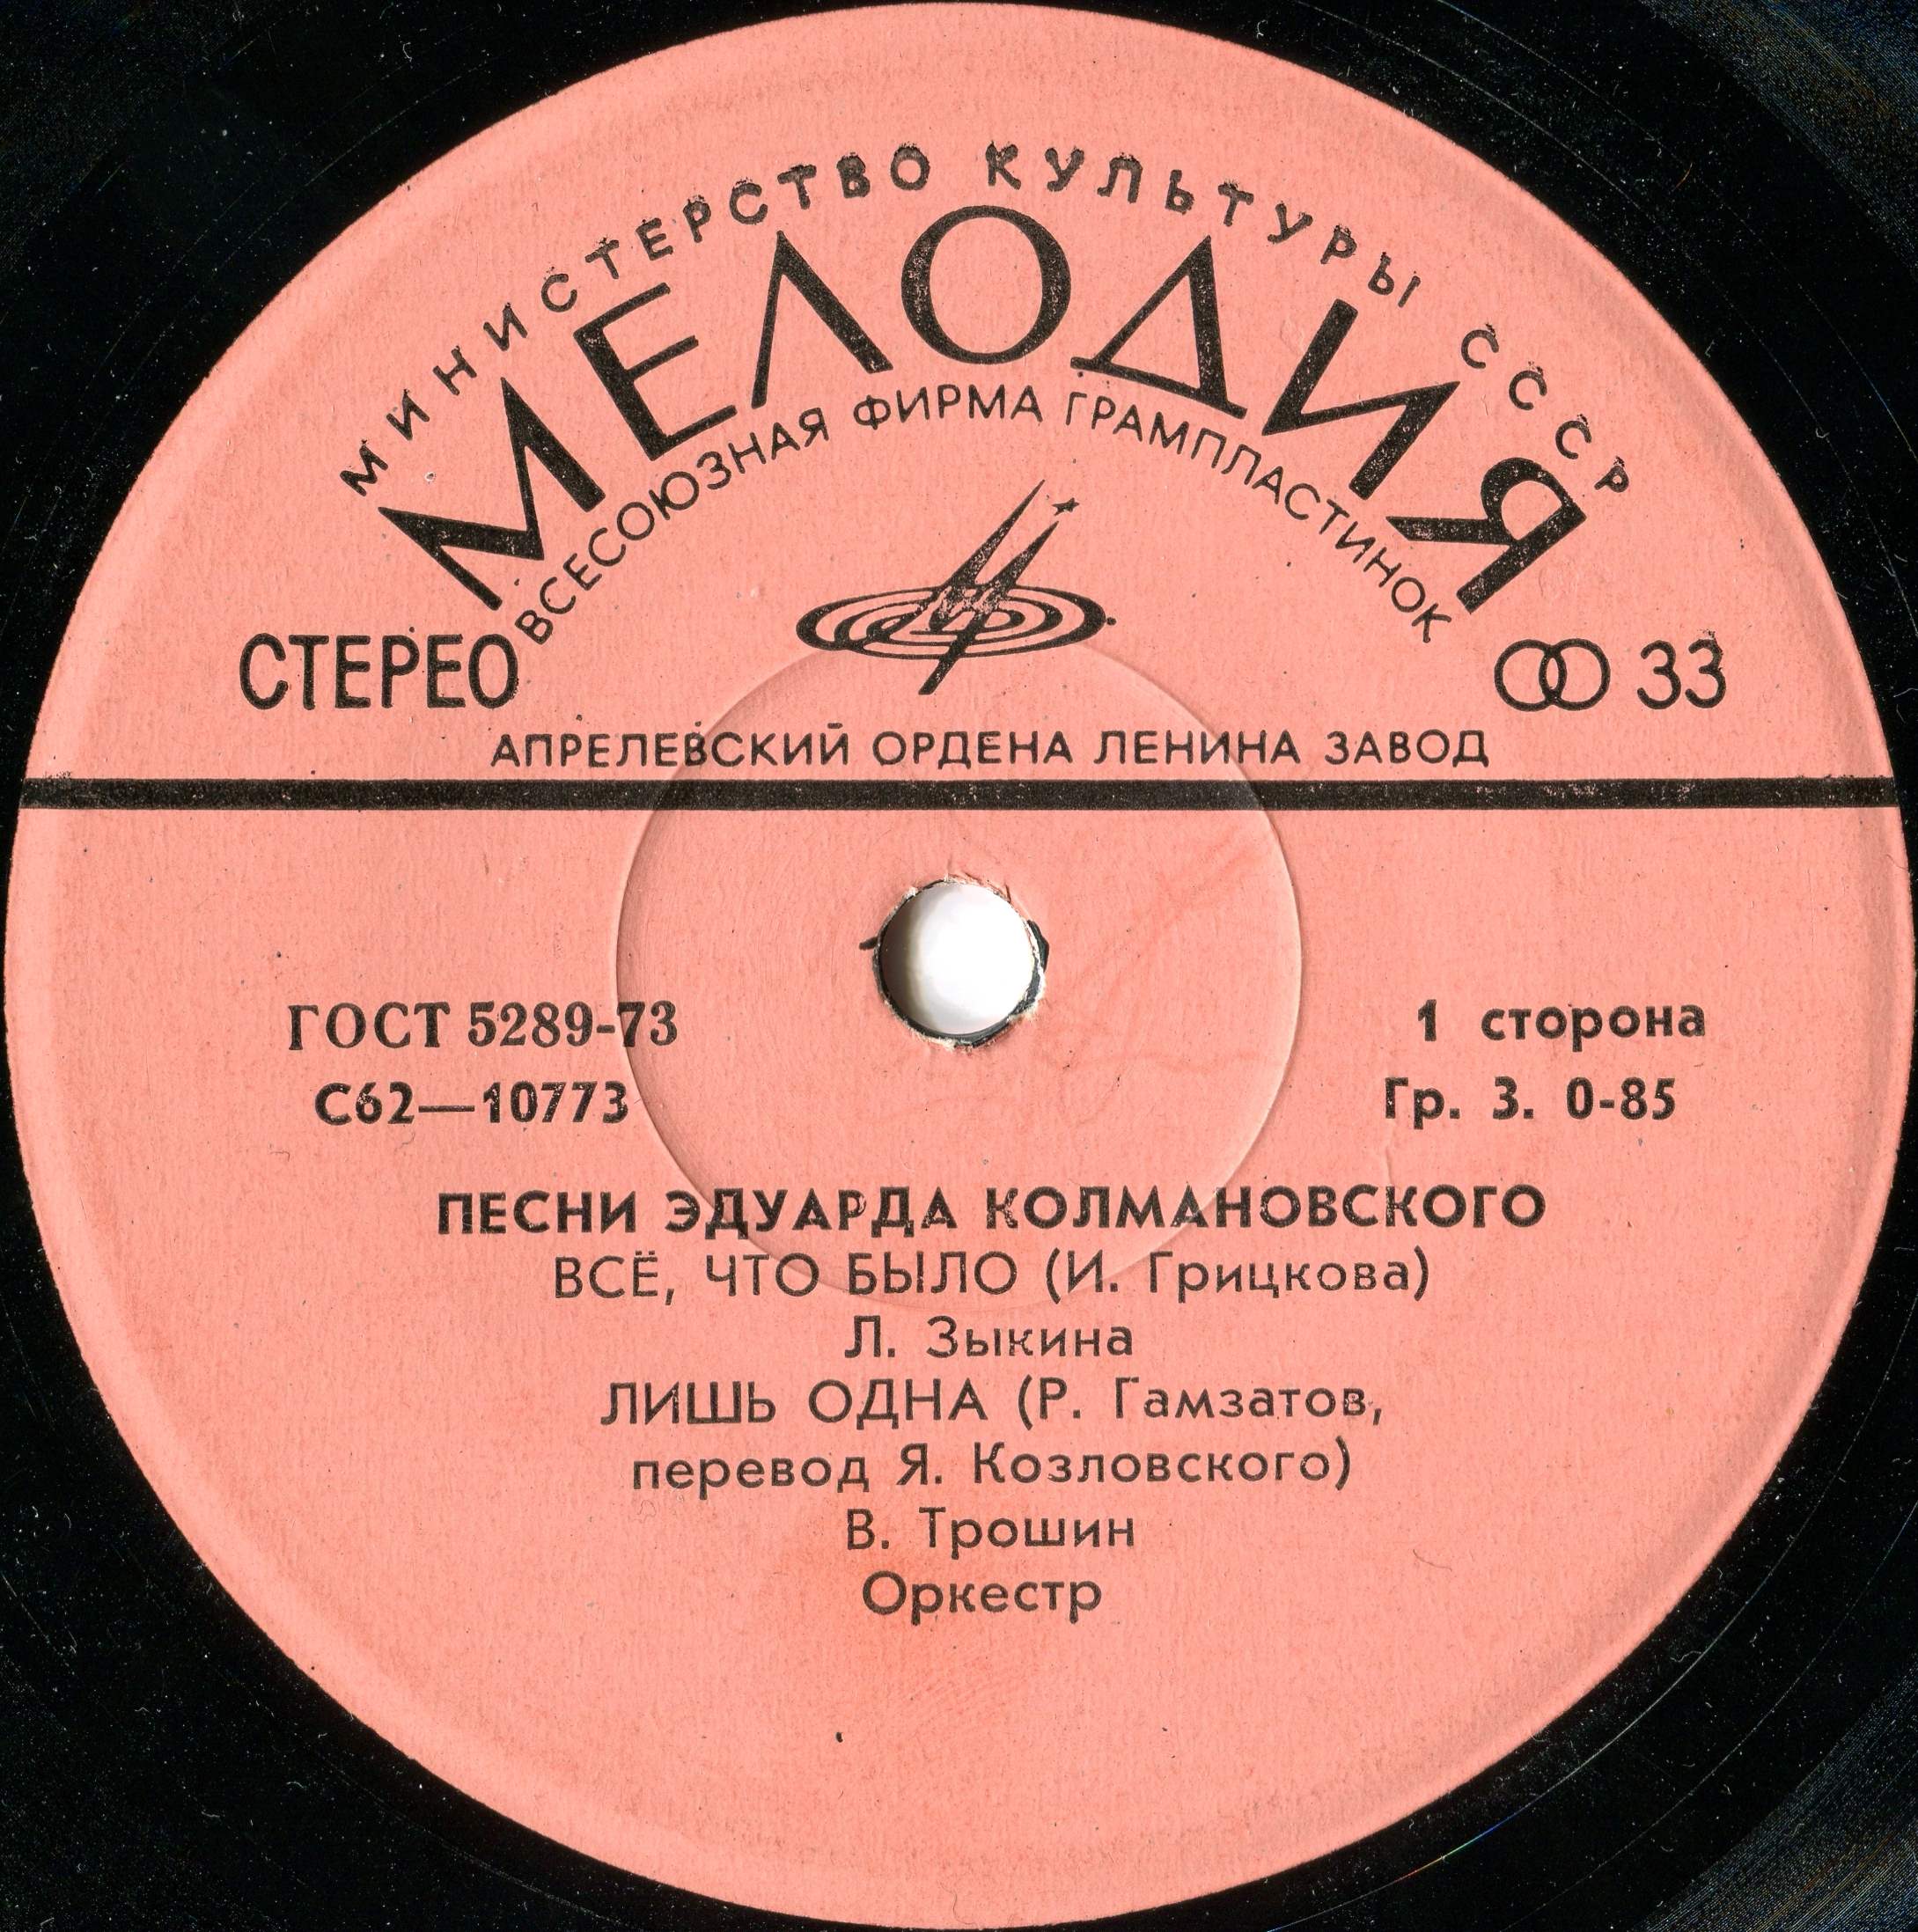 Песни Эдуарда КОЛМАНОВСКОГО (1923)